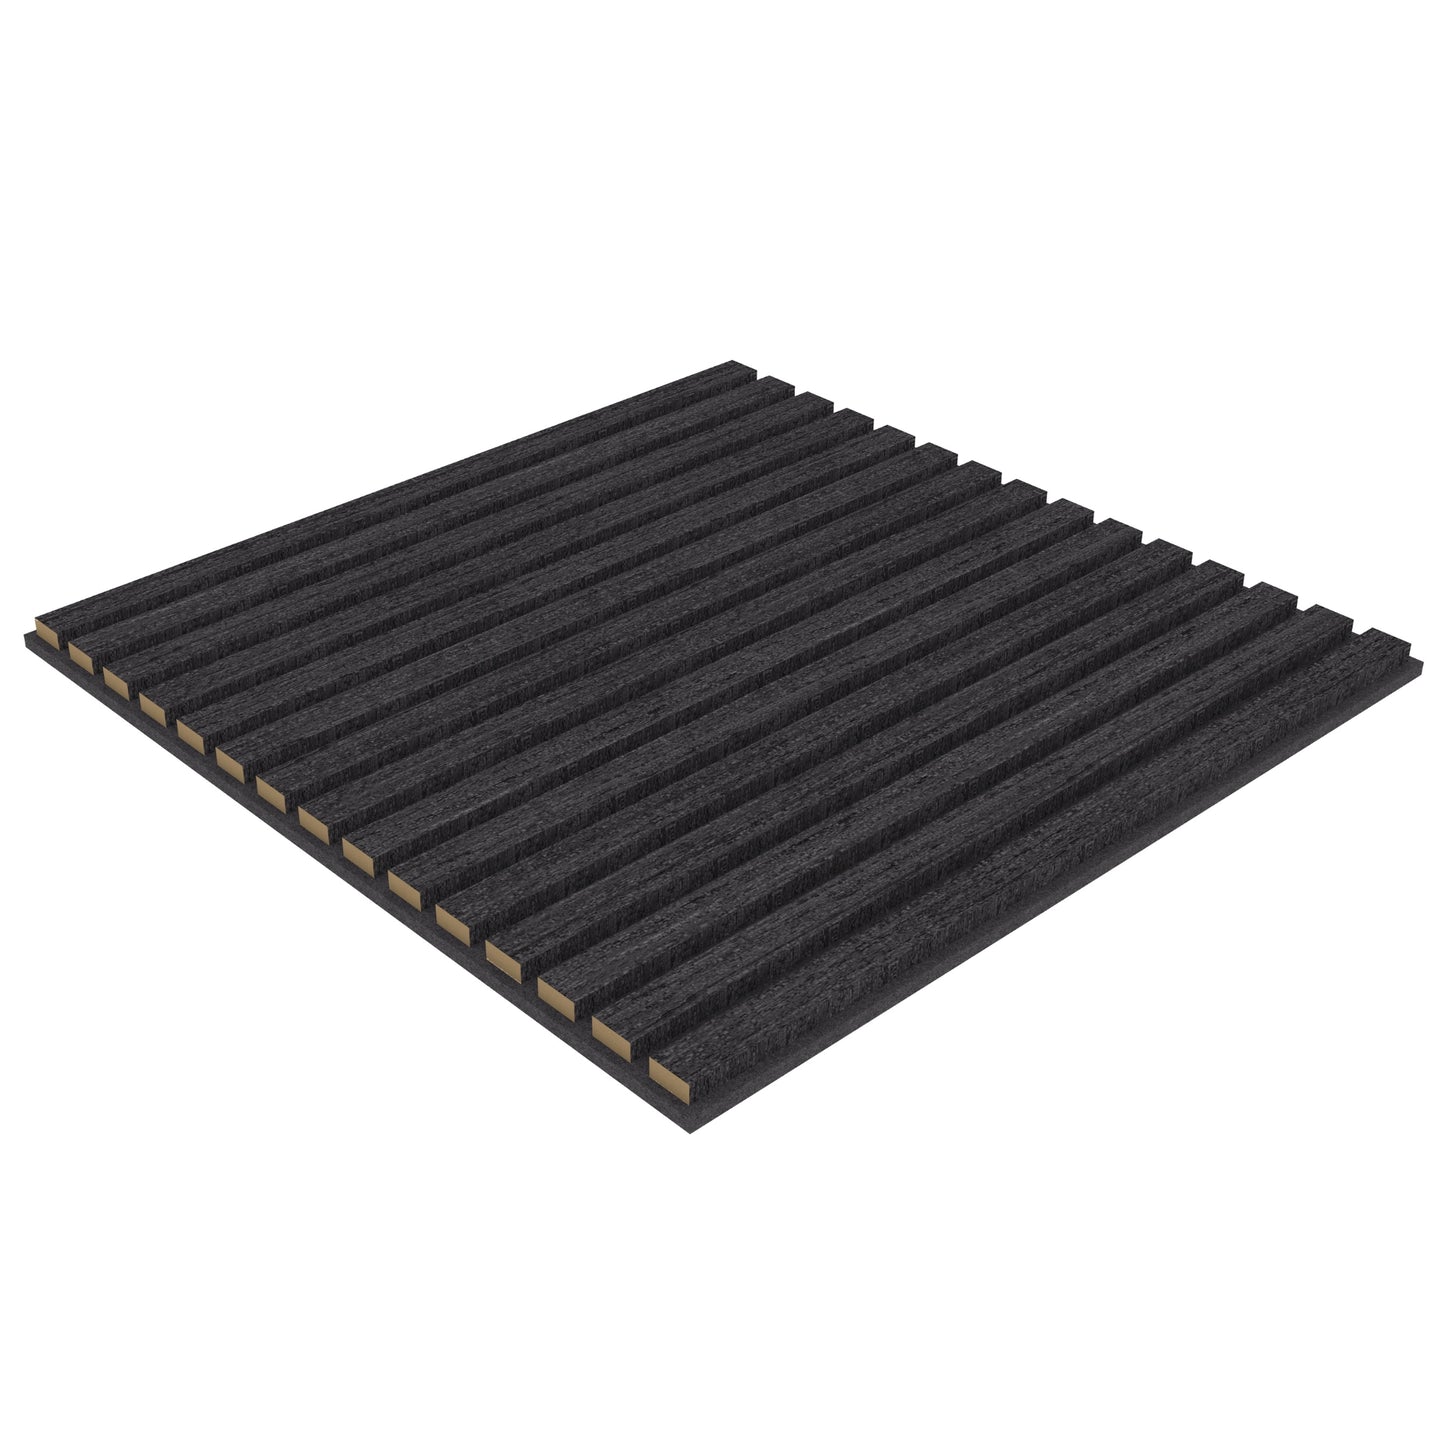 Black Acoustic Wood Wall Panel Tiles Series 1 - 60x60cm (4 Pack)